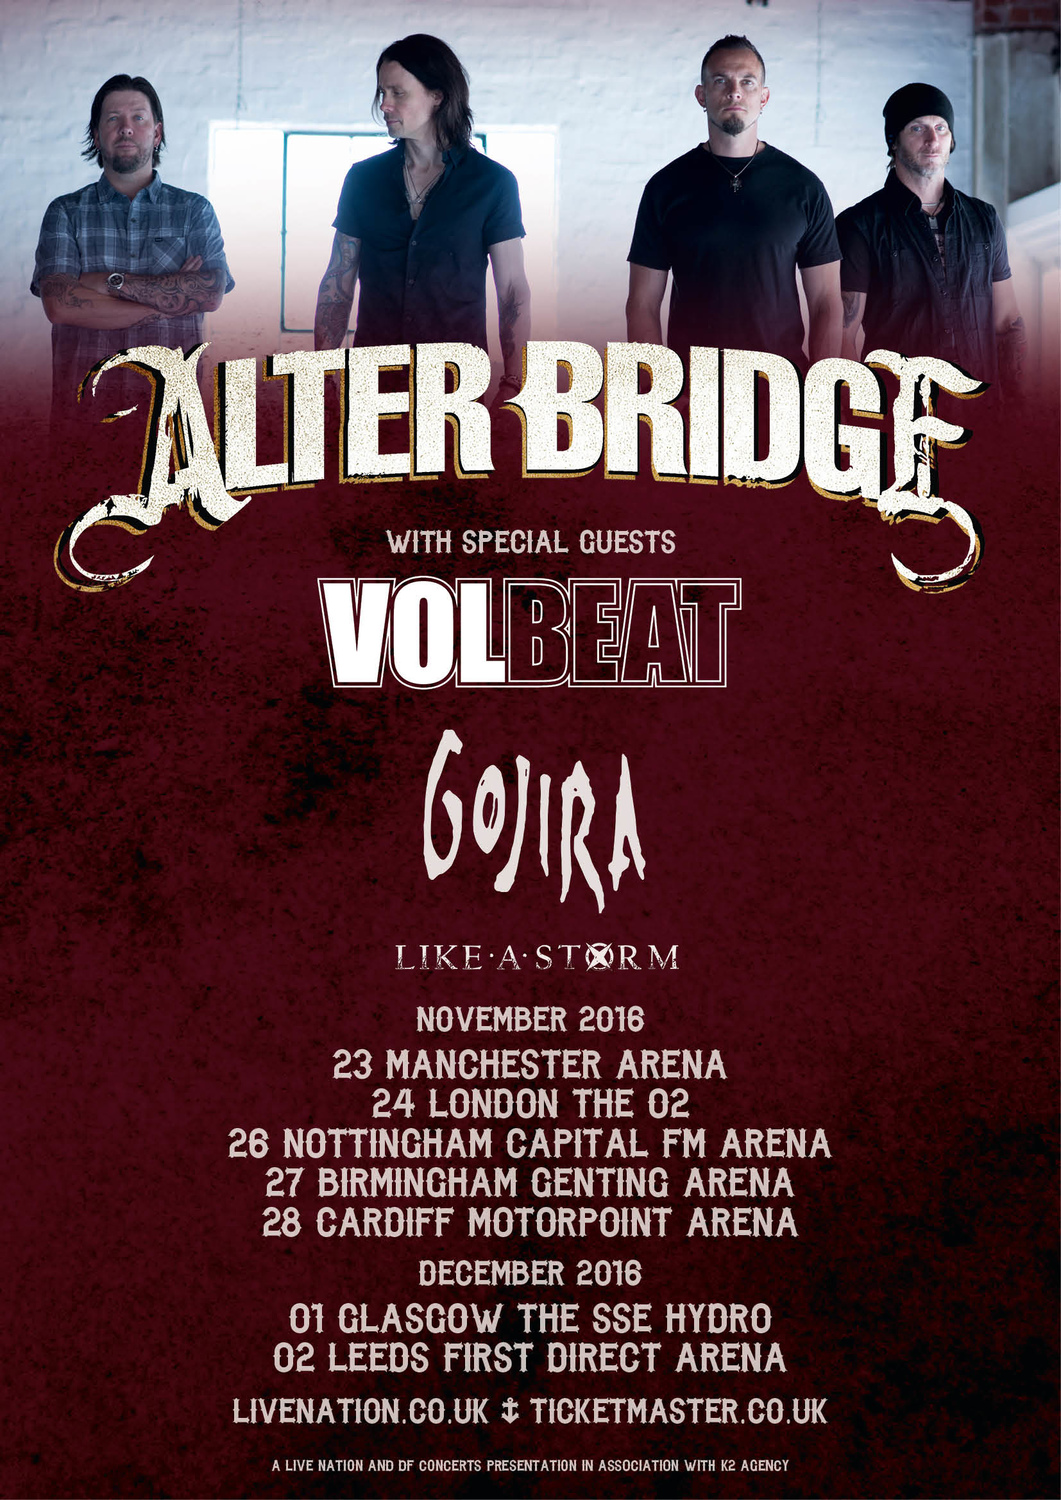 Volbeat News UK tour announced